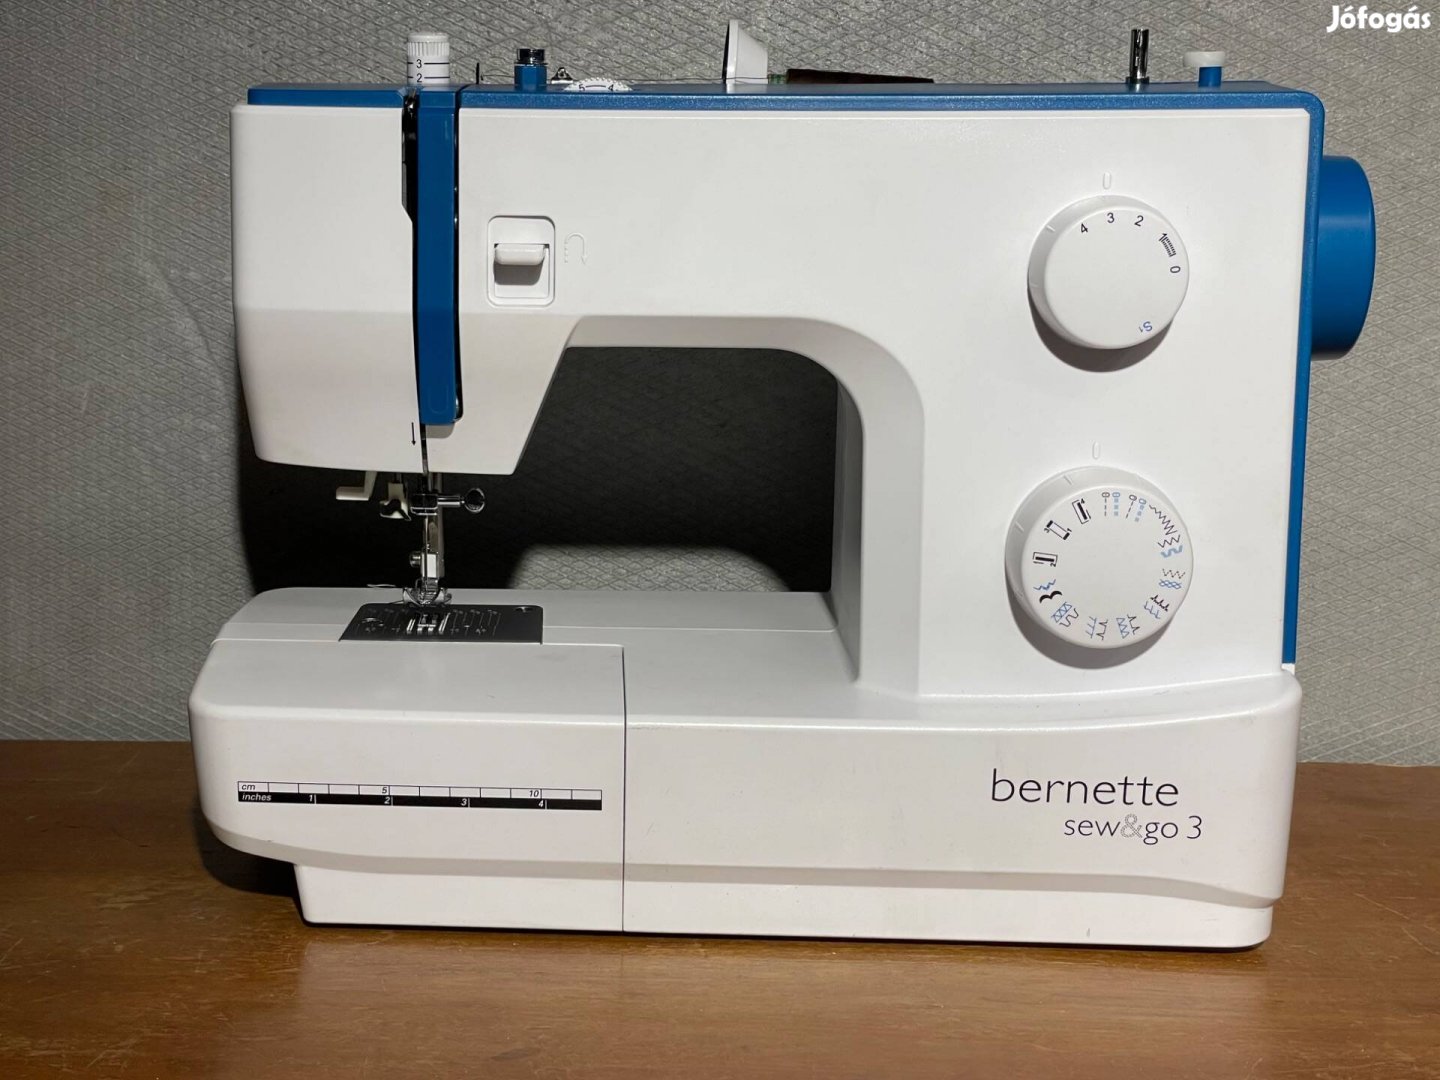 Bernette sew&go 3 varrógép